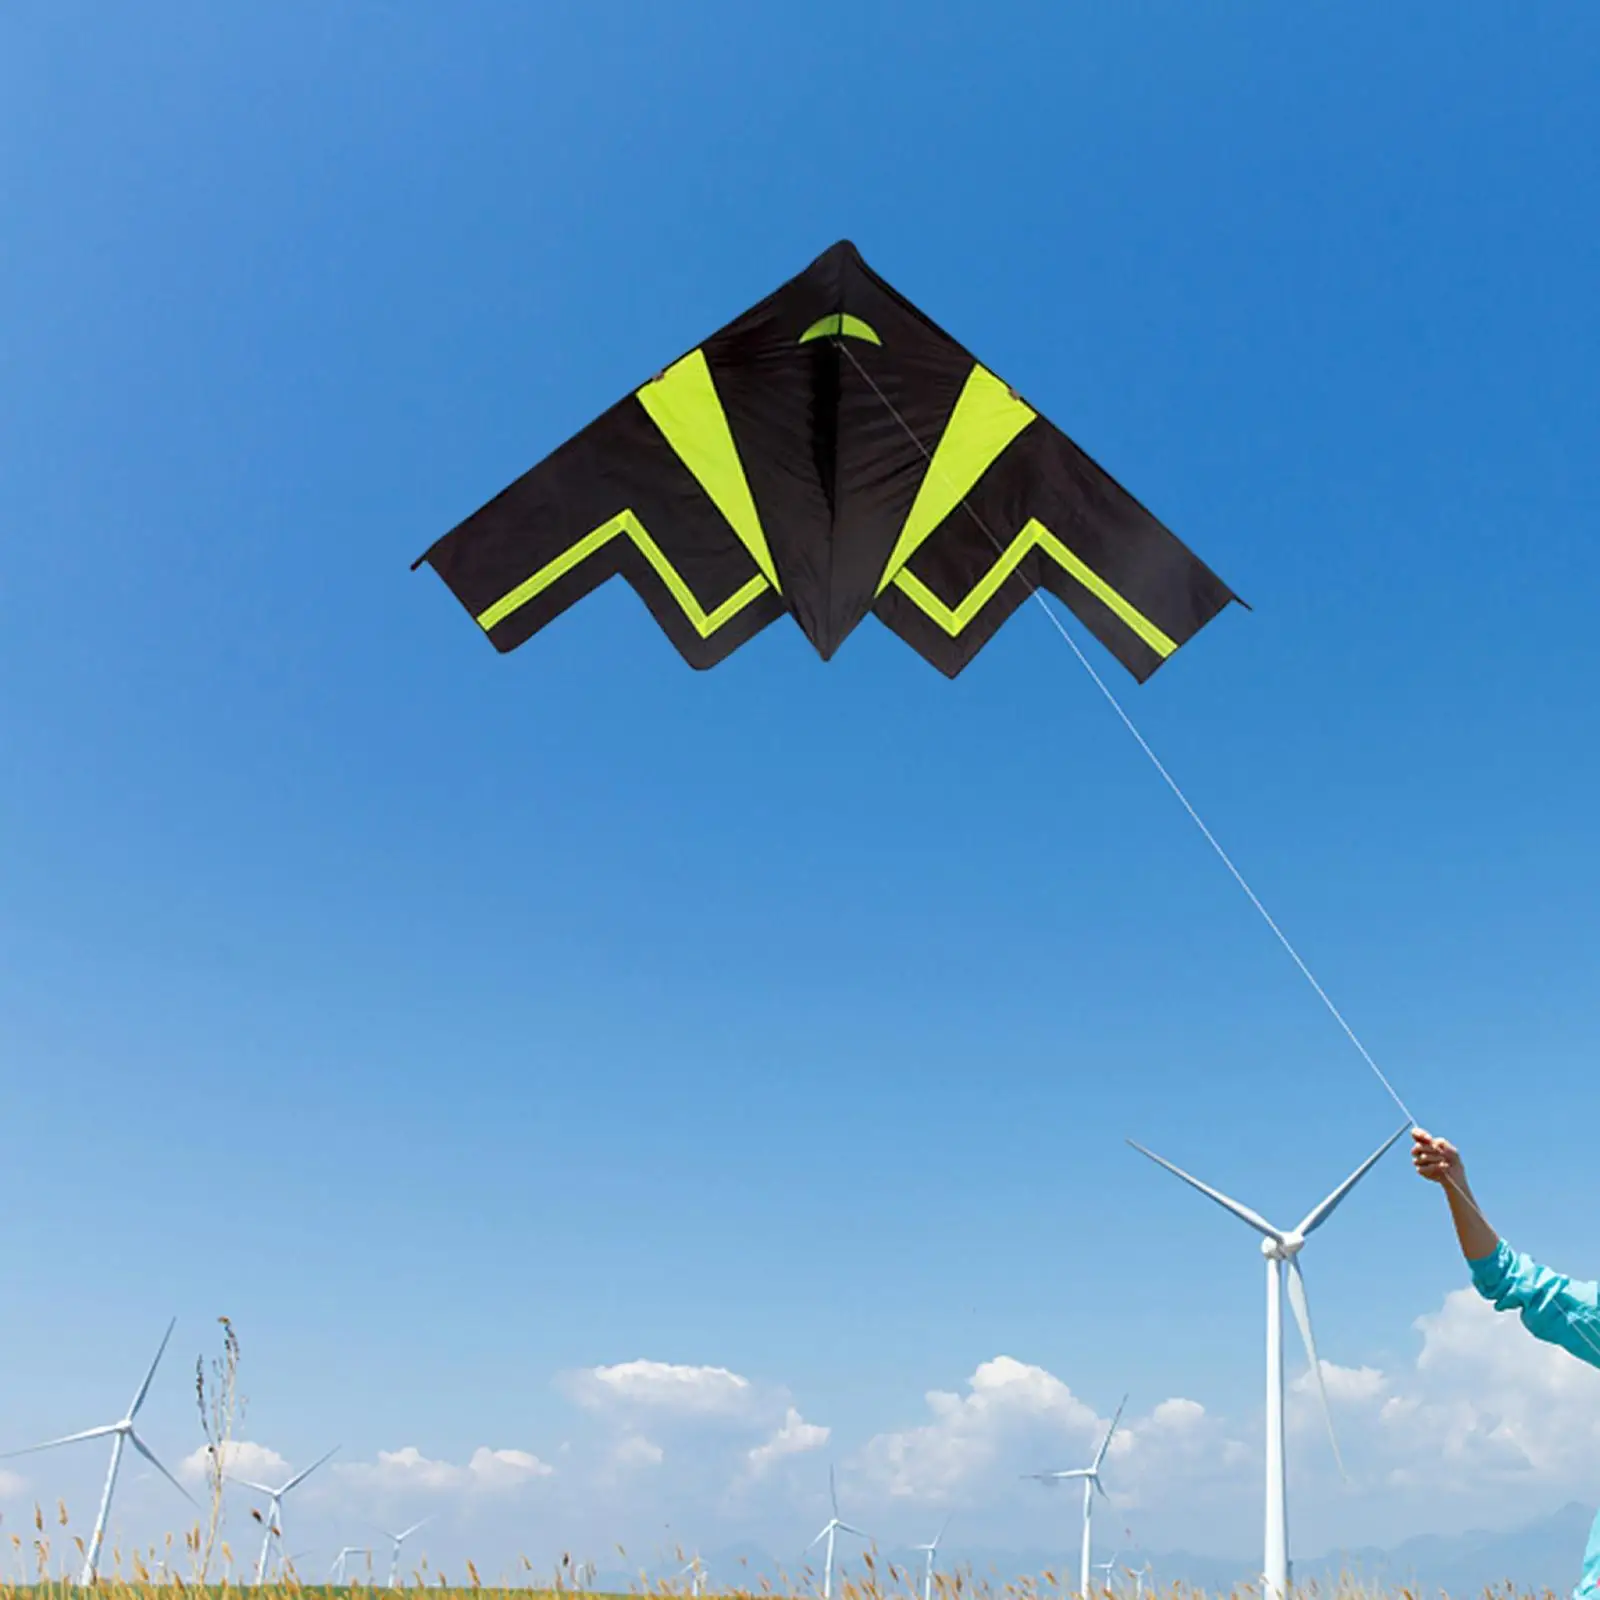 Giant Fighter Jet Kite Fly Kite Beach Toys for Park Sports Family Trips